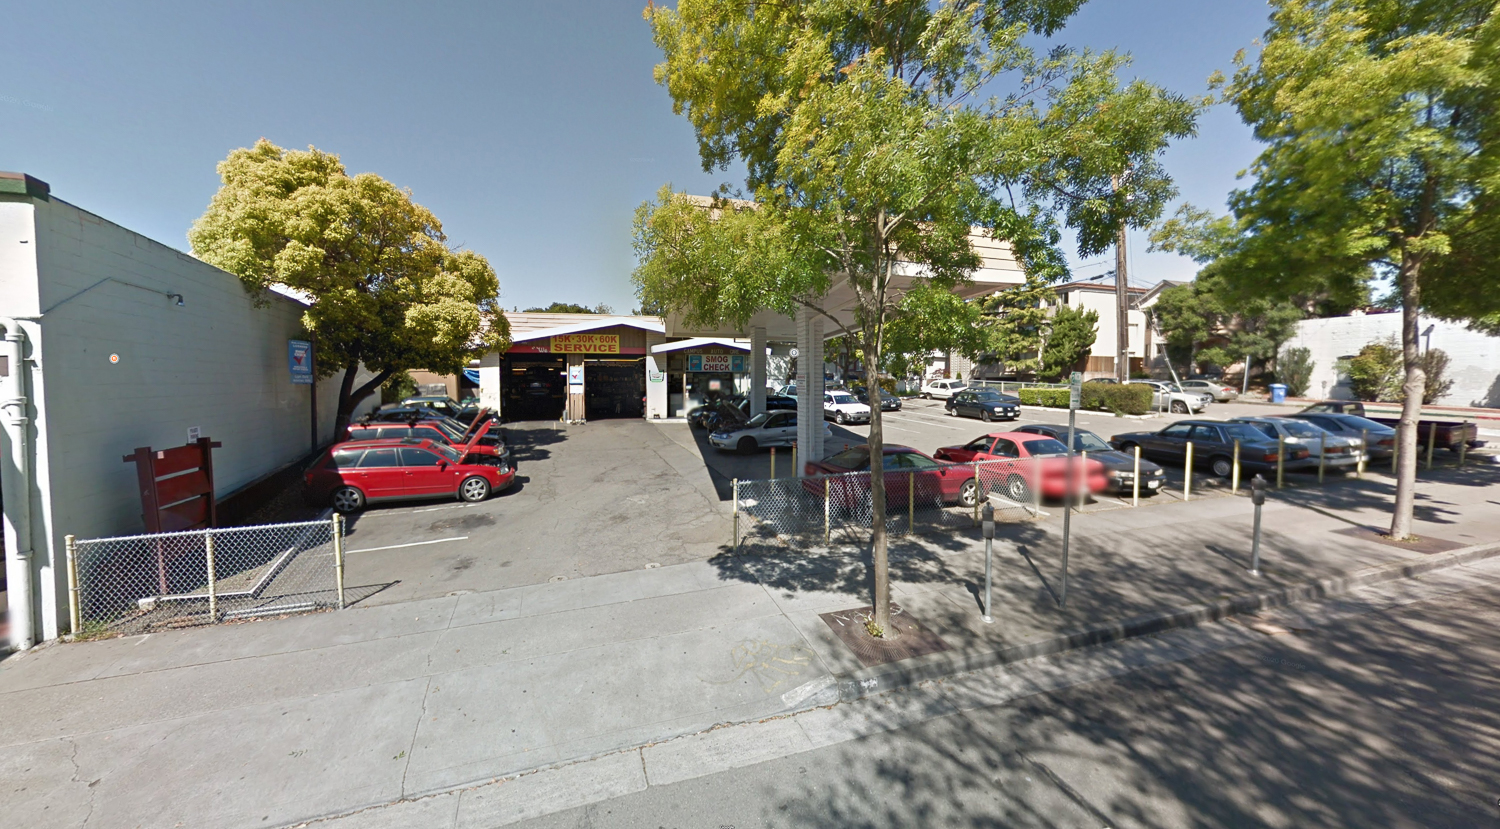 1752 Shattuck Avenue, image via Google Street View circa 2011